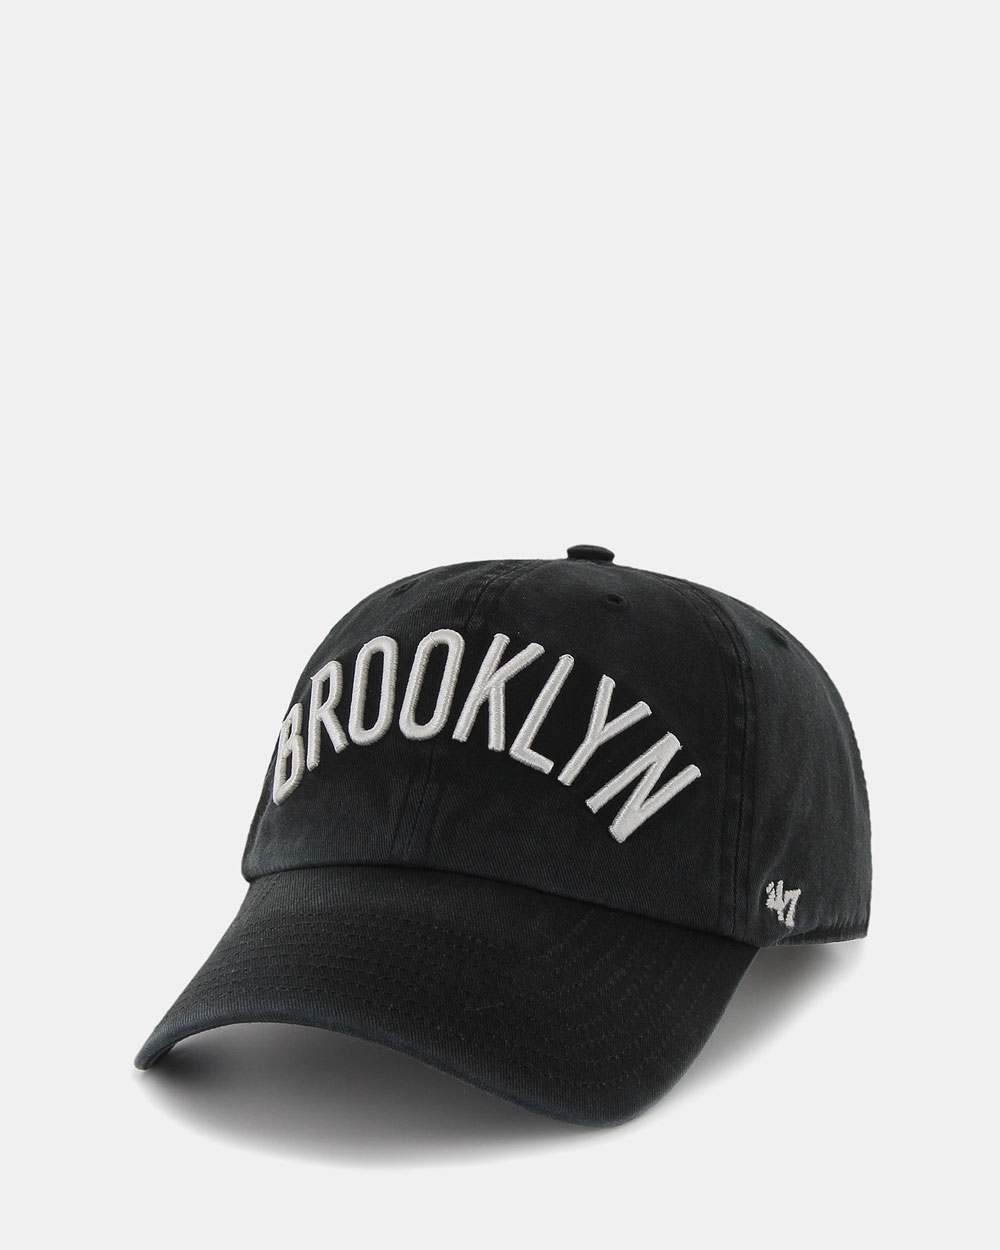 Brooklyn cap The Iconic nz